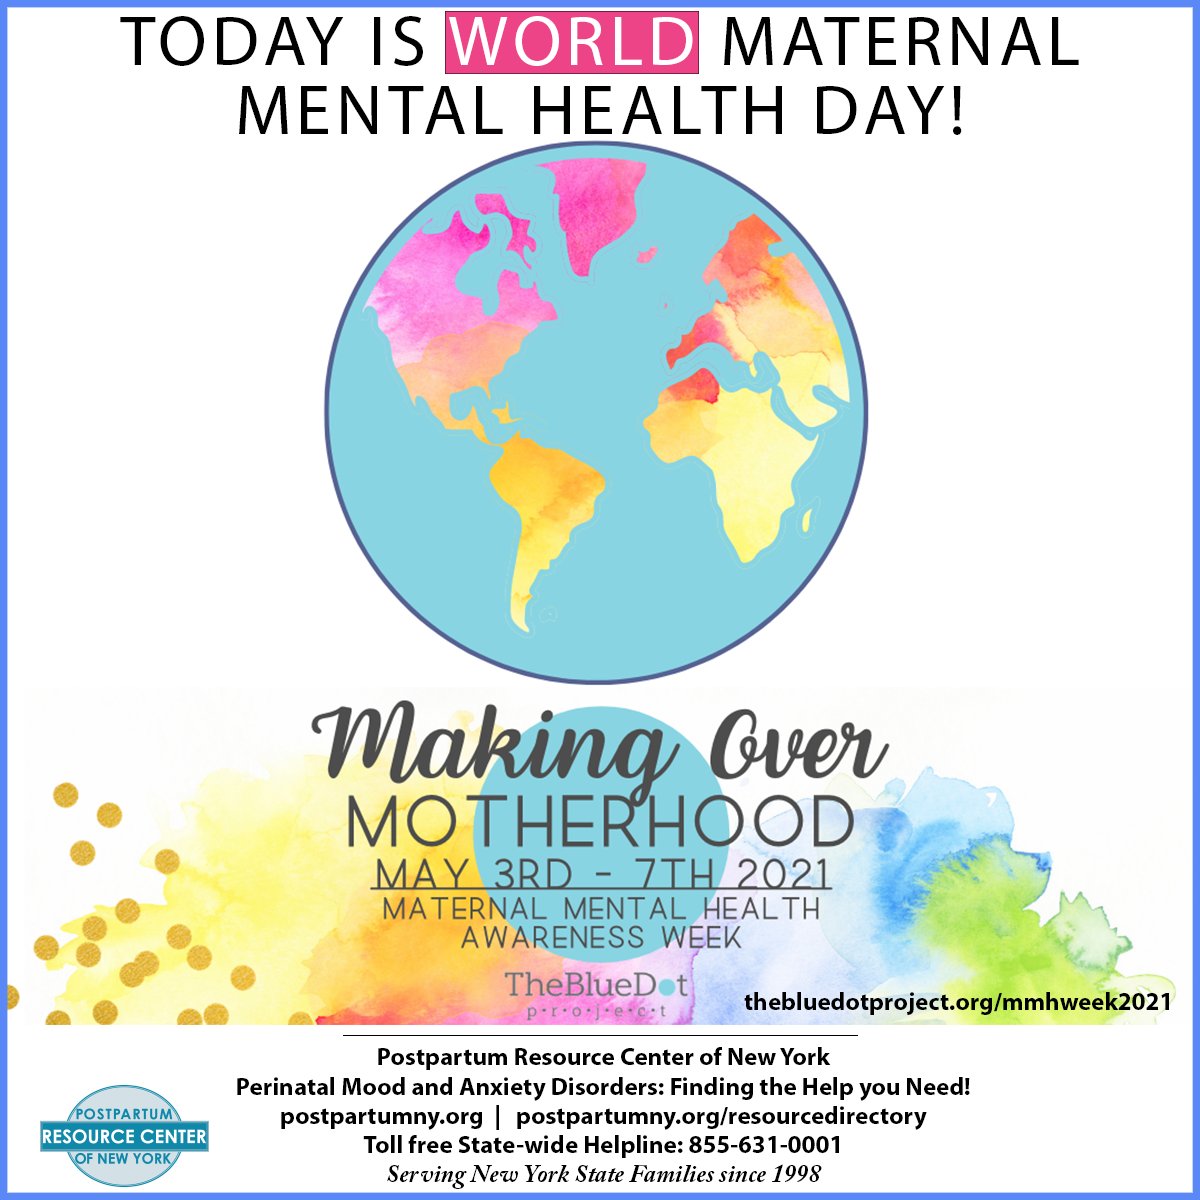 The Postpartum Resource Center of New York is a proud supporter of World Maternal Mental Health Day! #WMMHday

#GlobalMentalHealth #MaternalMHMatters #SaludMentalMaternaImporta #MMHWeek2021 #MentalHealthAwareness  #MakingOverMotherhood

#PRCNY #Project62NY